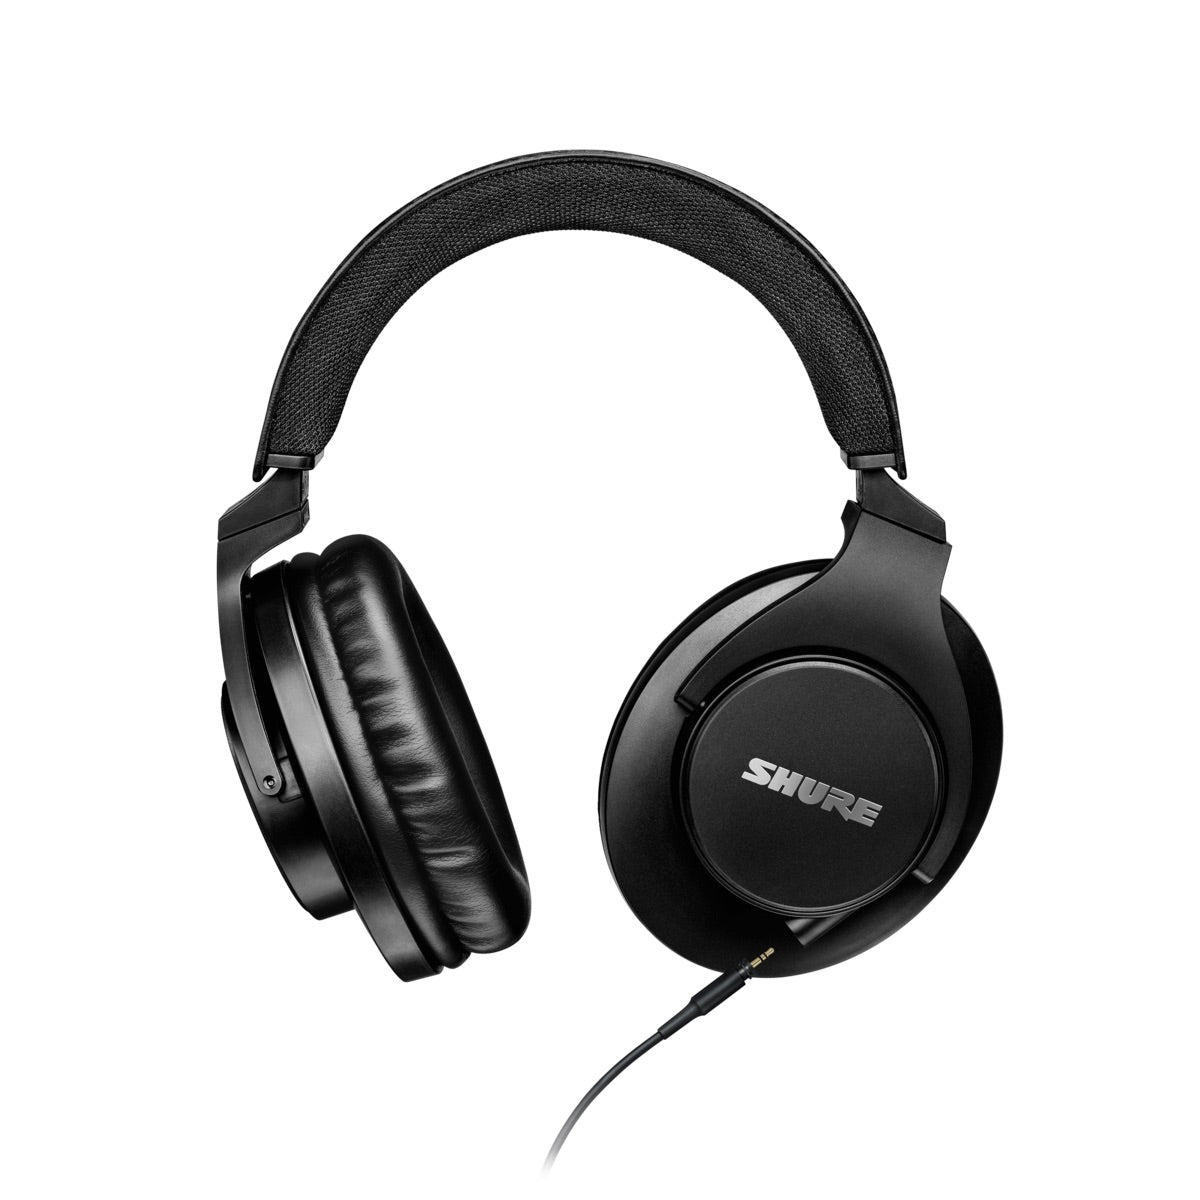 Shure SRH440A - Professional Studio Headphones, rotating muff